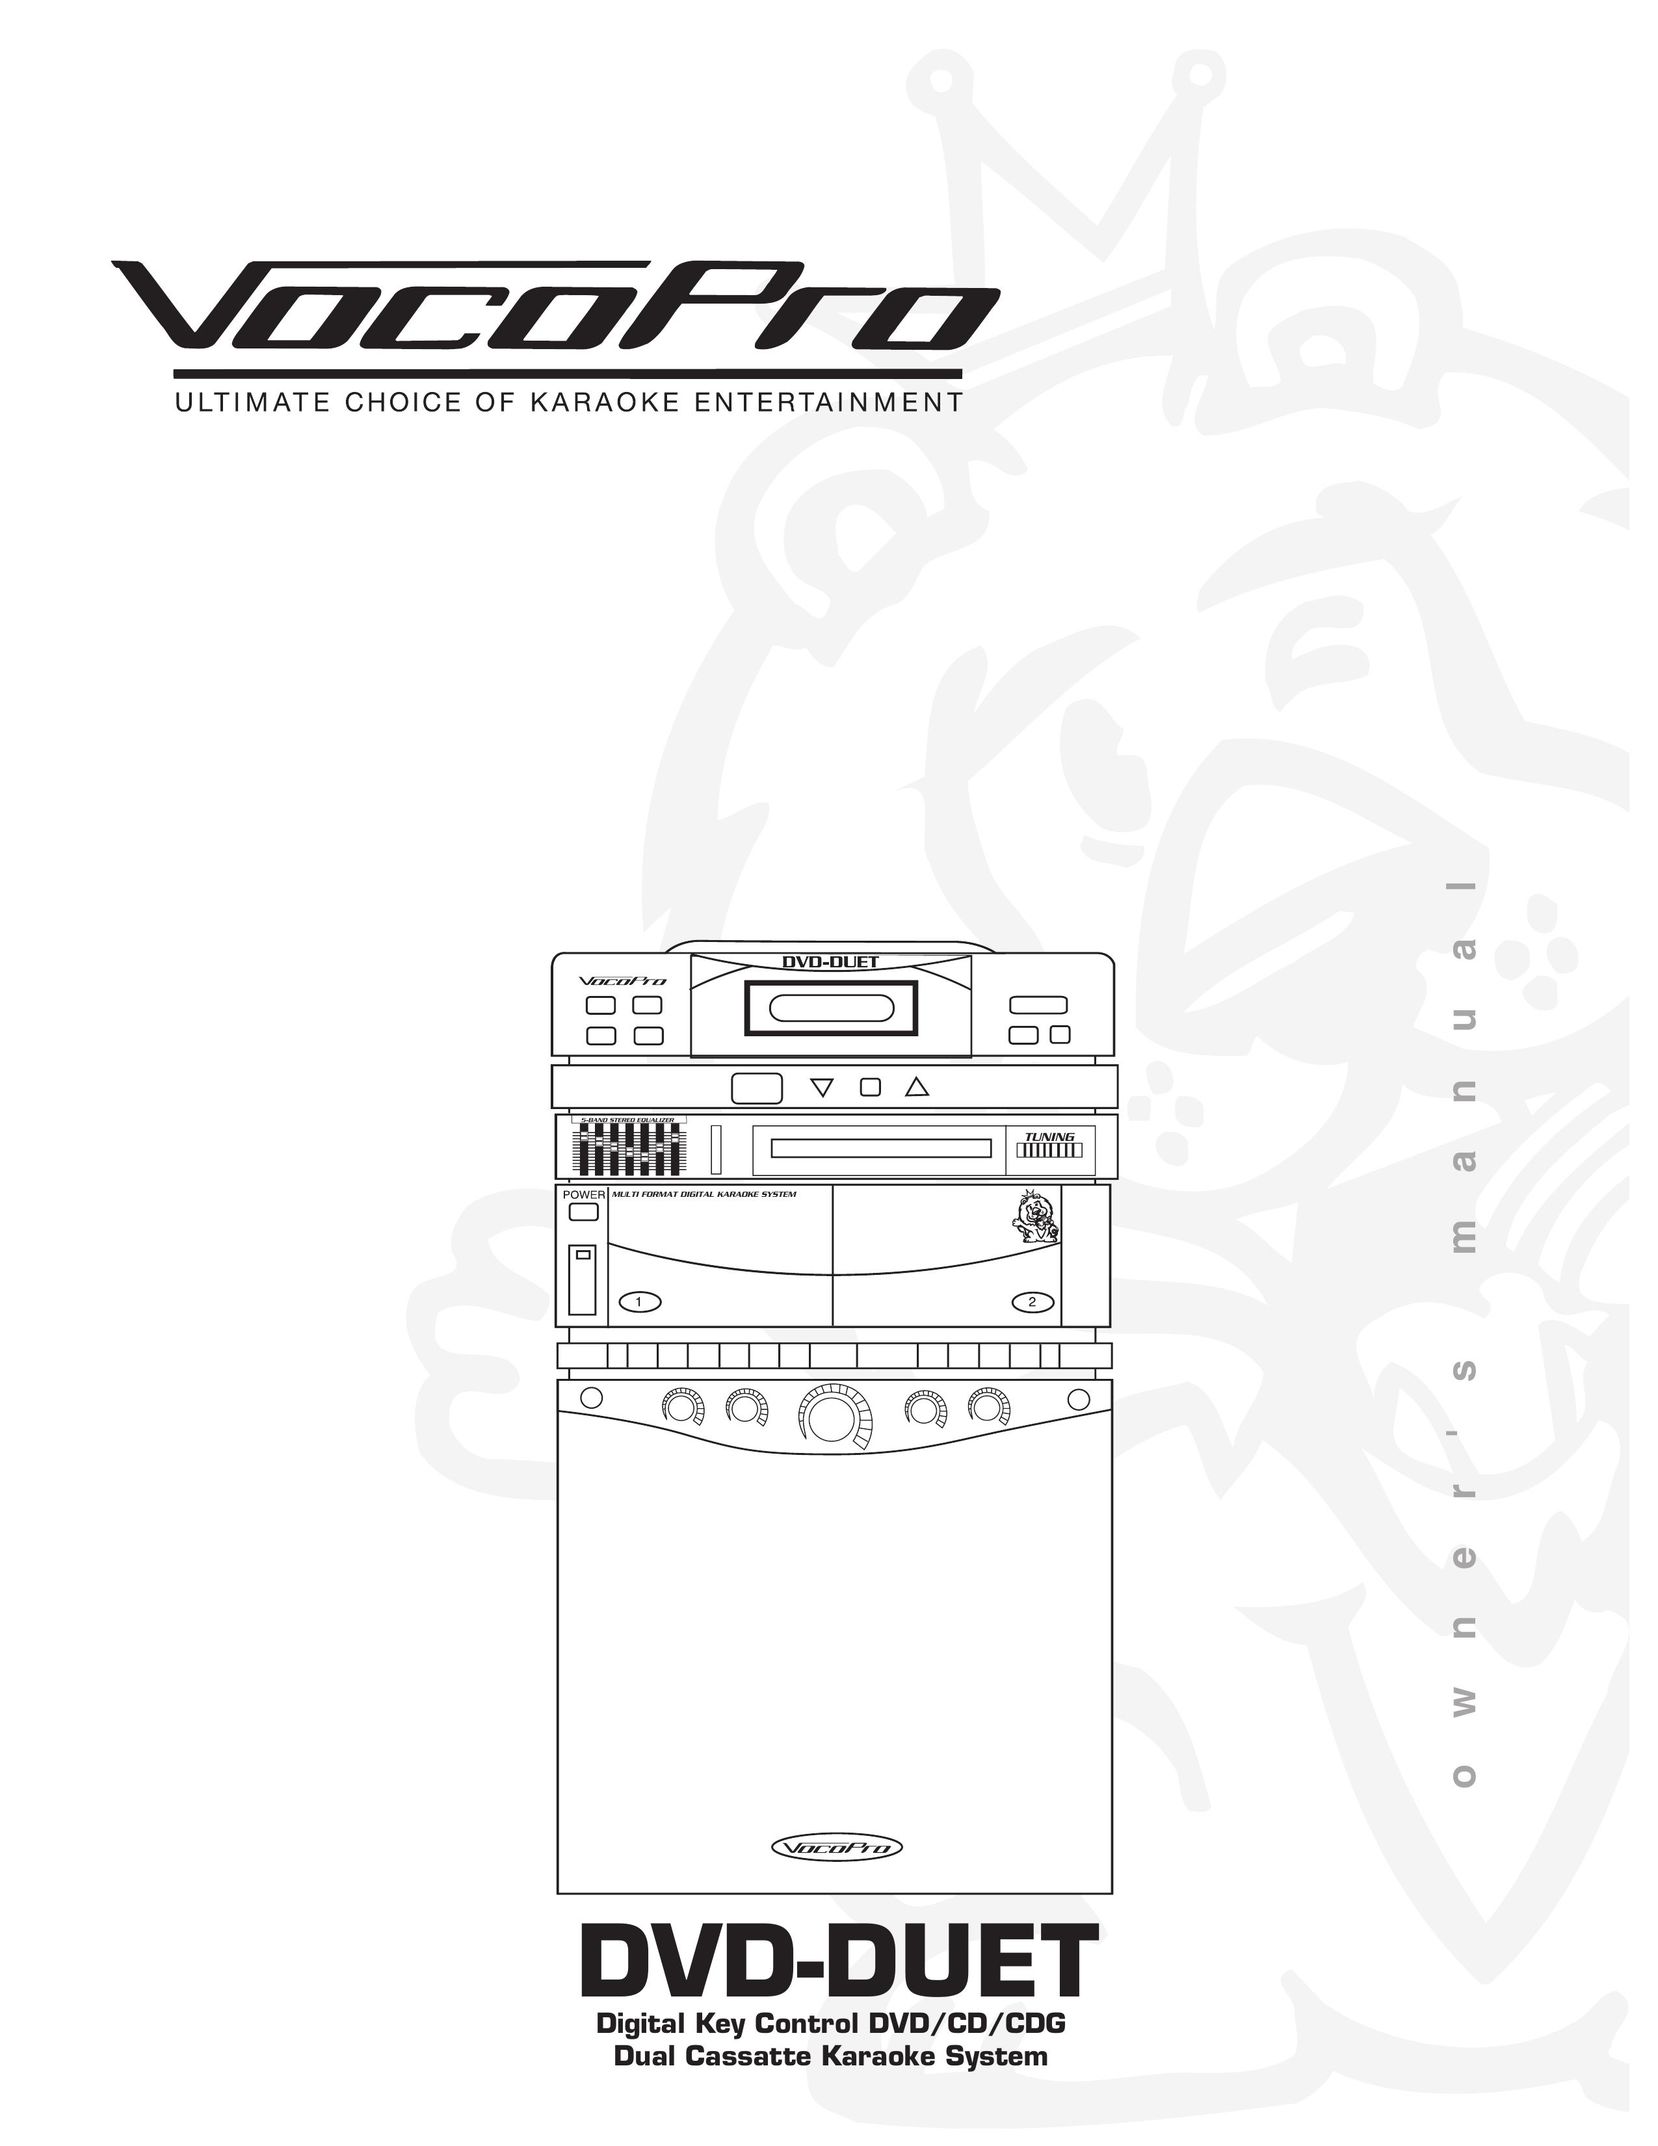 VocoPro DVD-Duet Digital Key Control DVD/CD/CDC Dual Cassette Karaoke System DVD Player User Manual